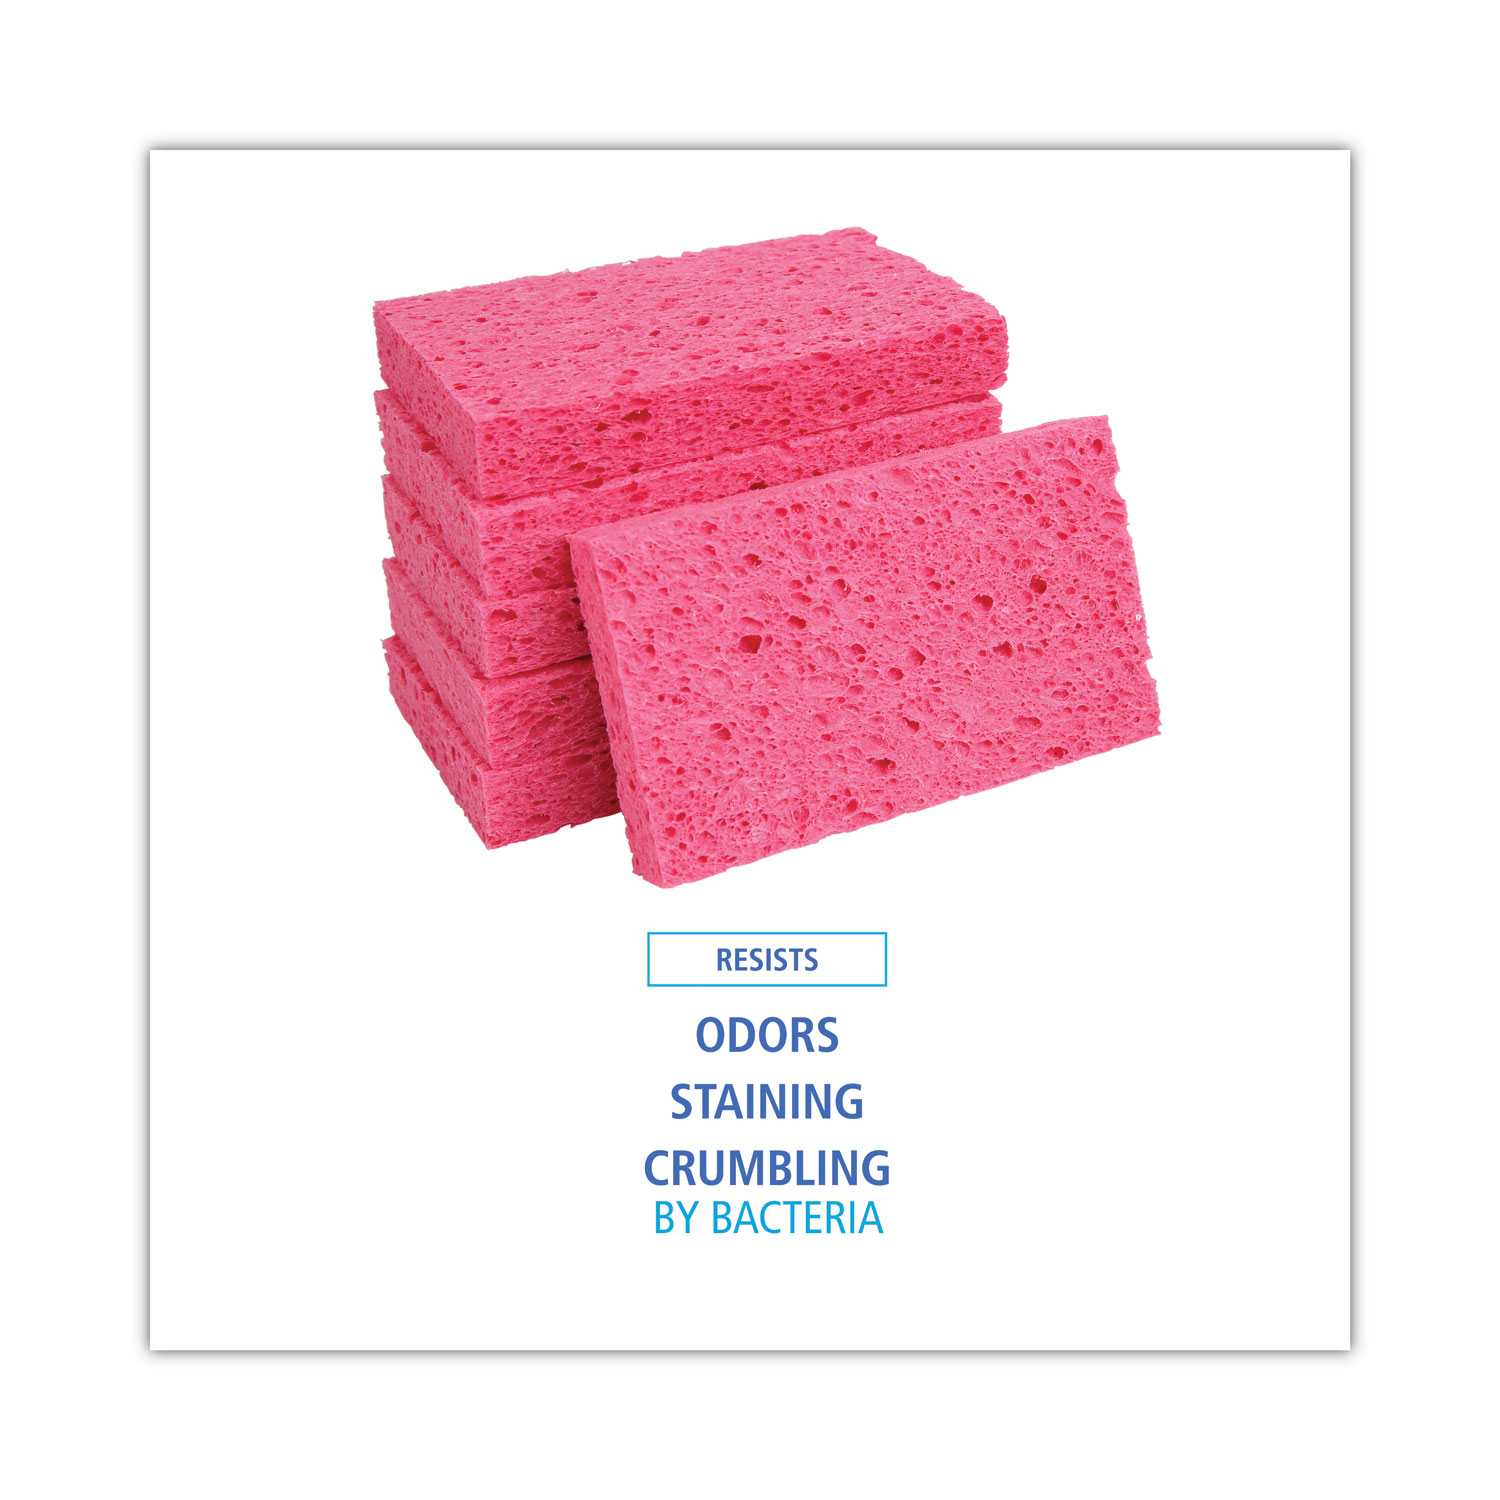 Dustbane Products Ltd. - Cellulose Sponge